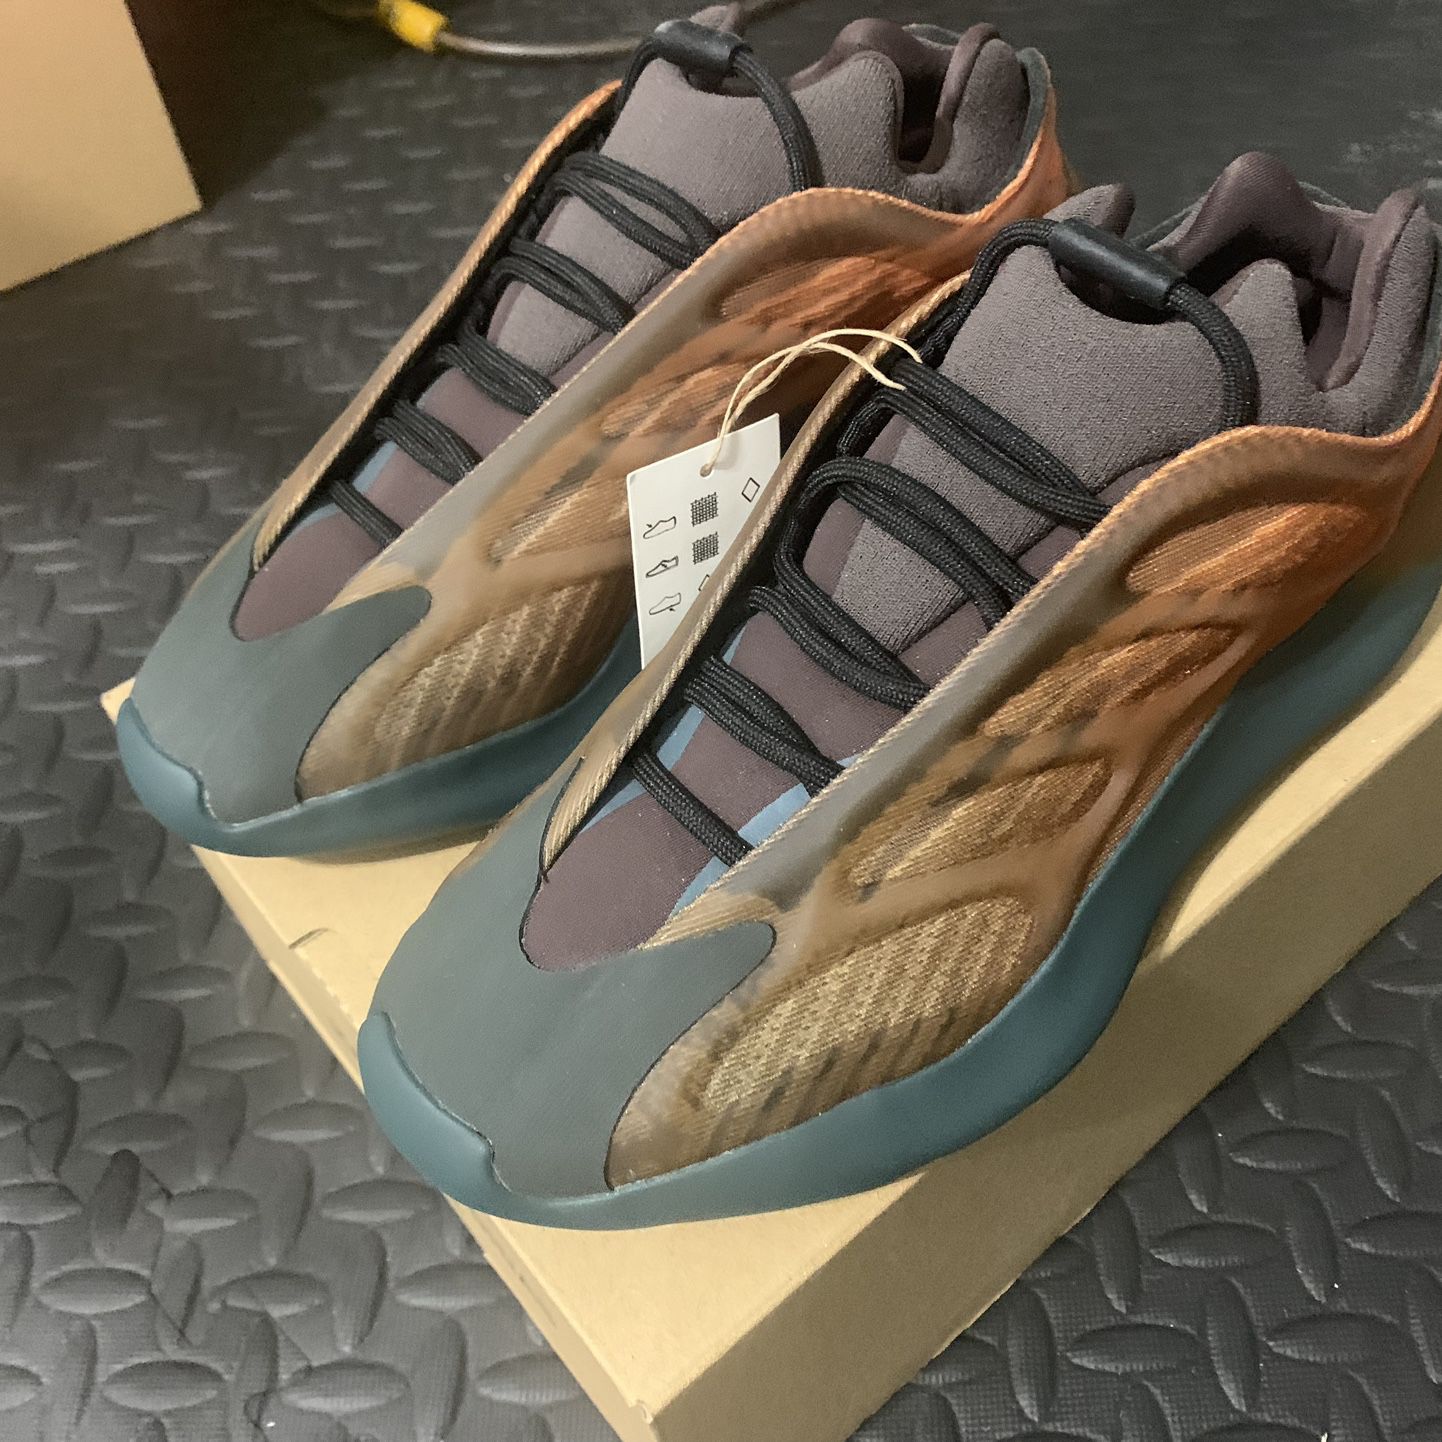 Adidas Yeezy 700 v3 ‘Copper Fade’ Men’s Size 9.0